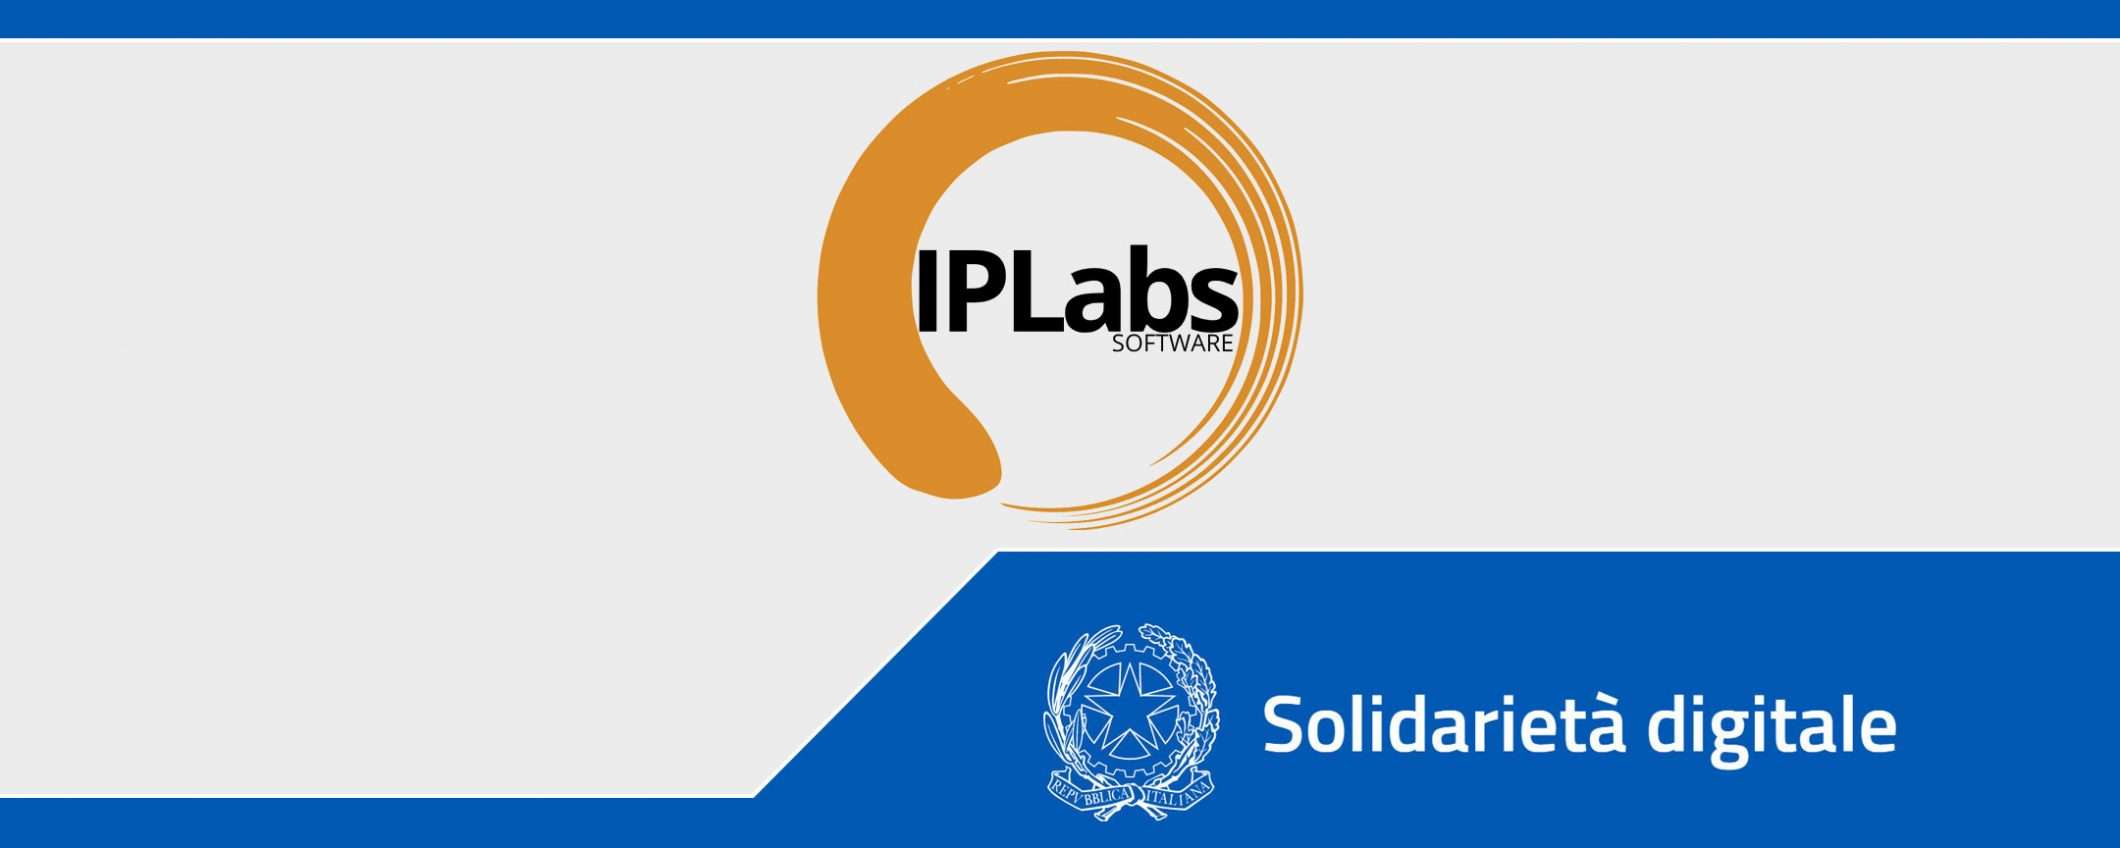 Solidarietà Digitale: CallY di IPLabs